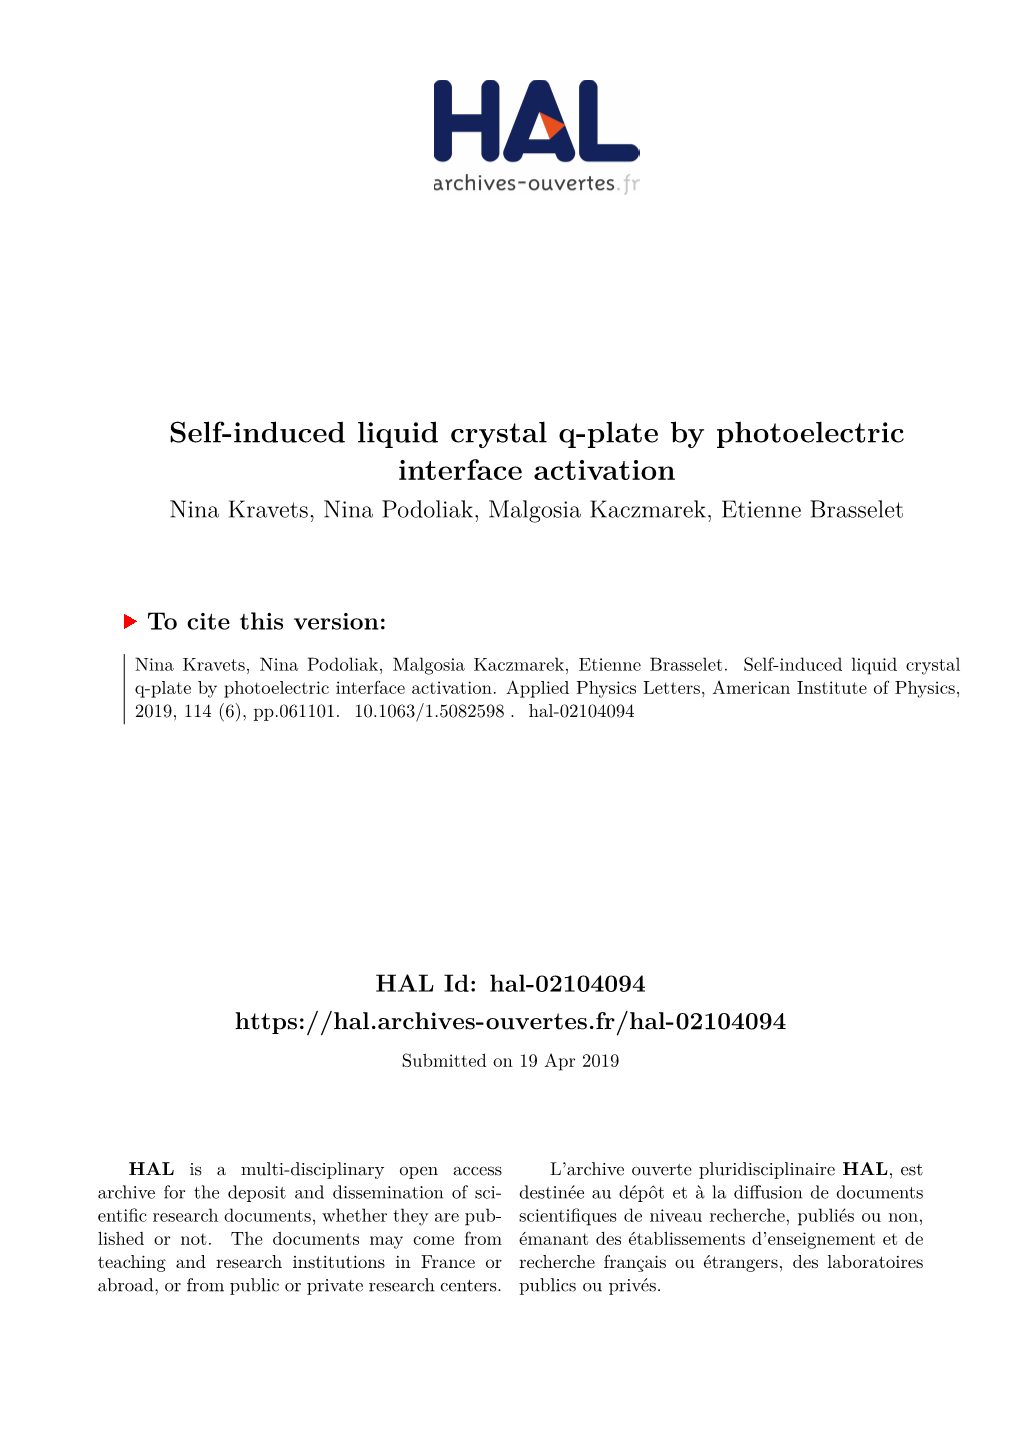 Self-Induced Liquid Crystal Q-Plate by Photoelectric Interface Activation Nina Kravets, Nina Podoliak, Malgosia Kaczmarek, Etienne Brasselet